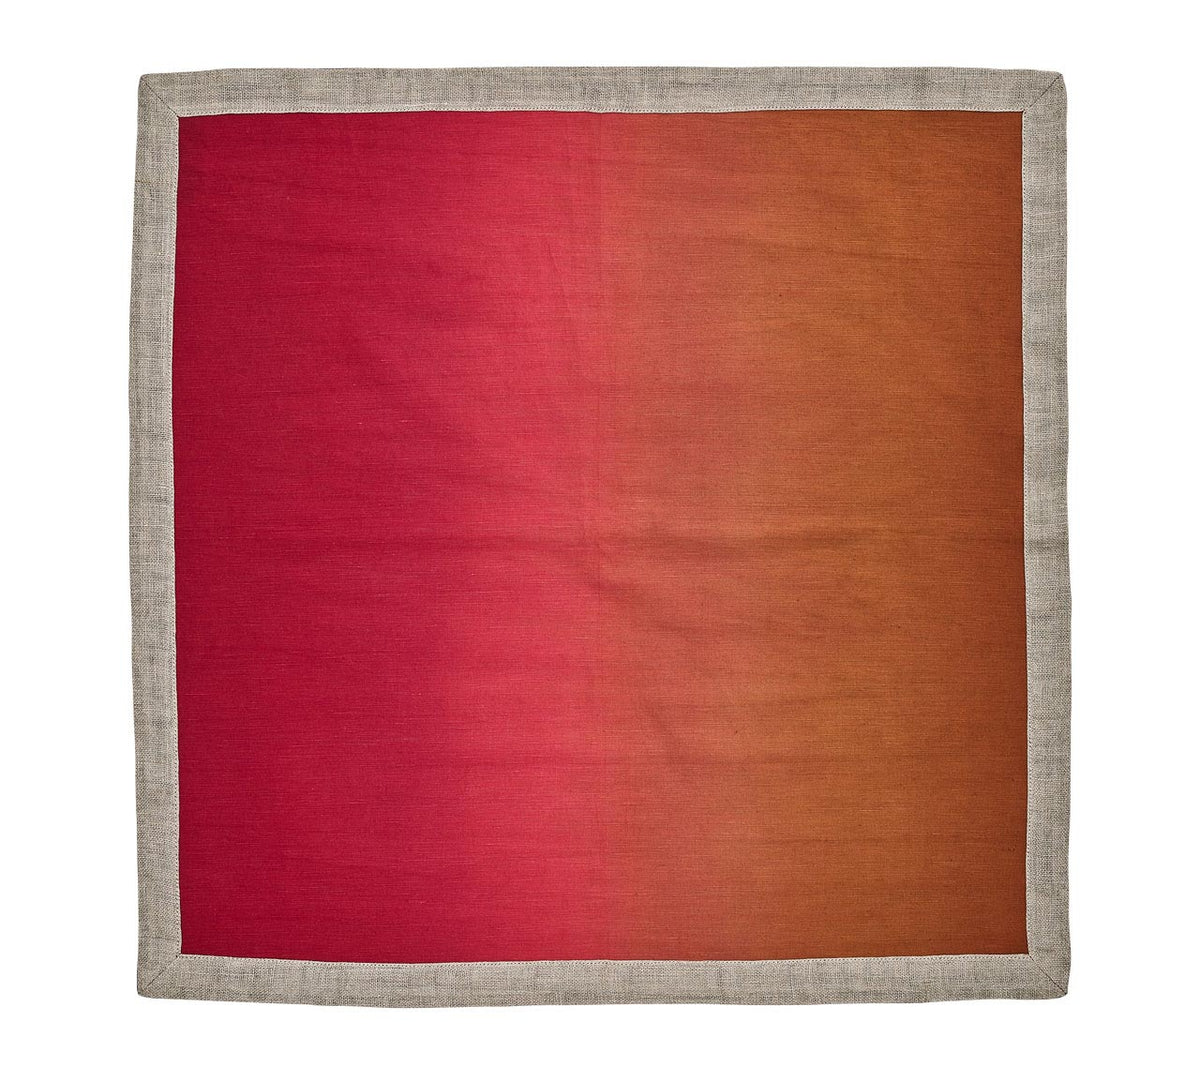 Cranberry/Orange Dip Dye Napkin - Set of 4